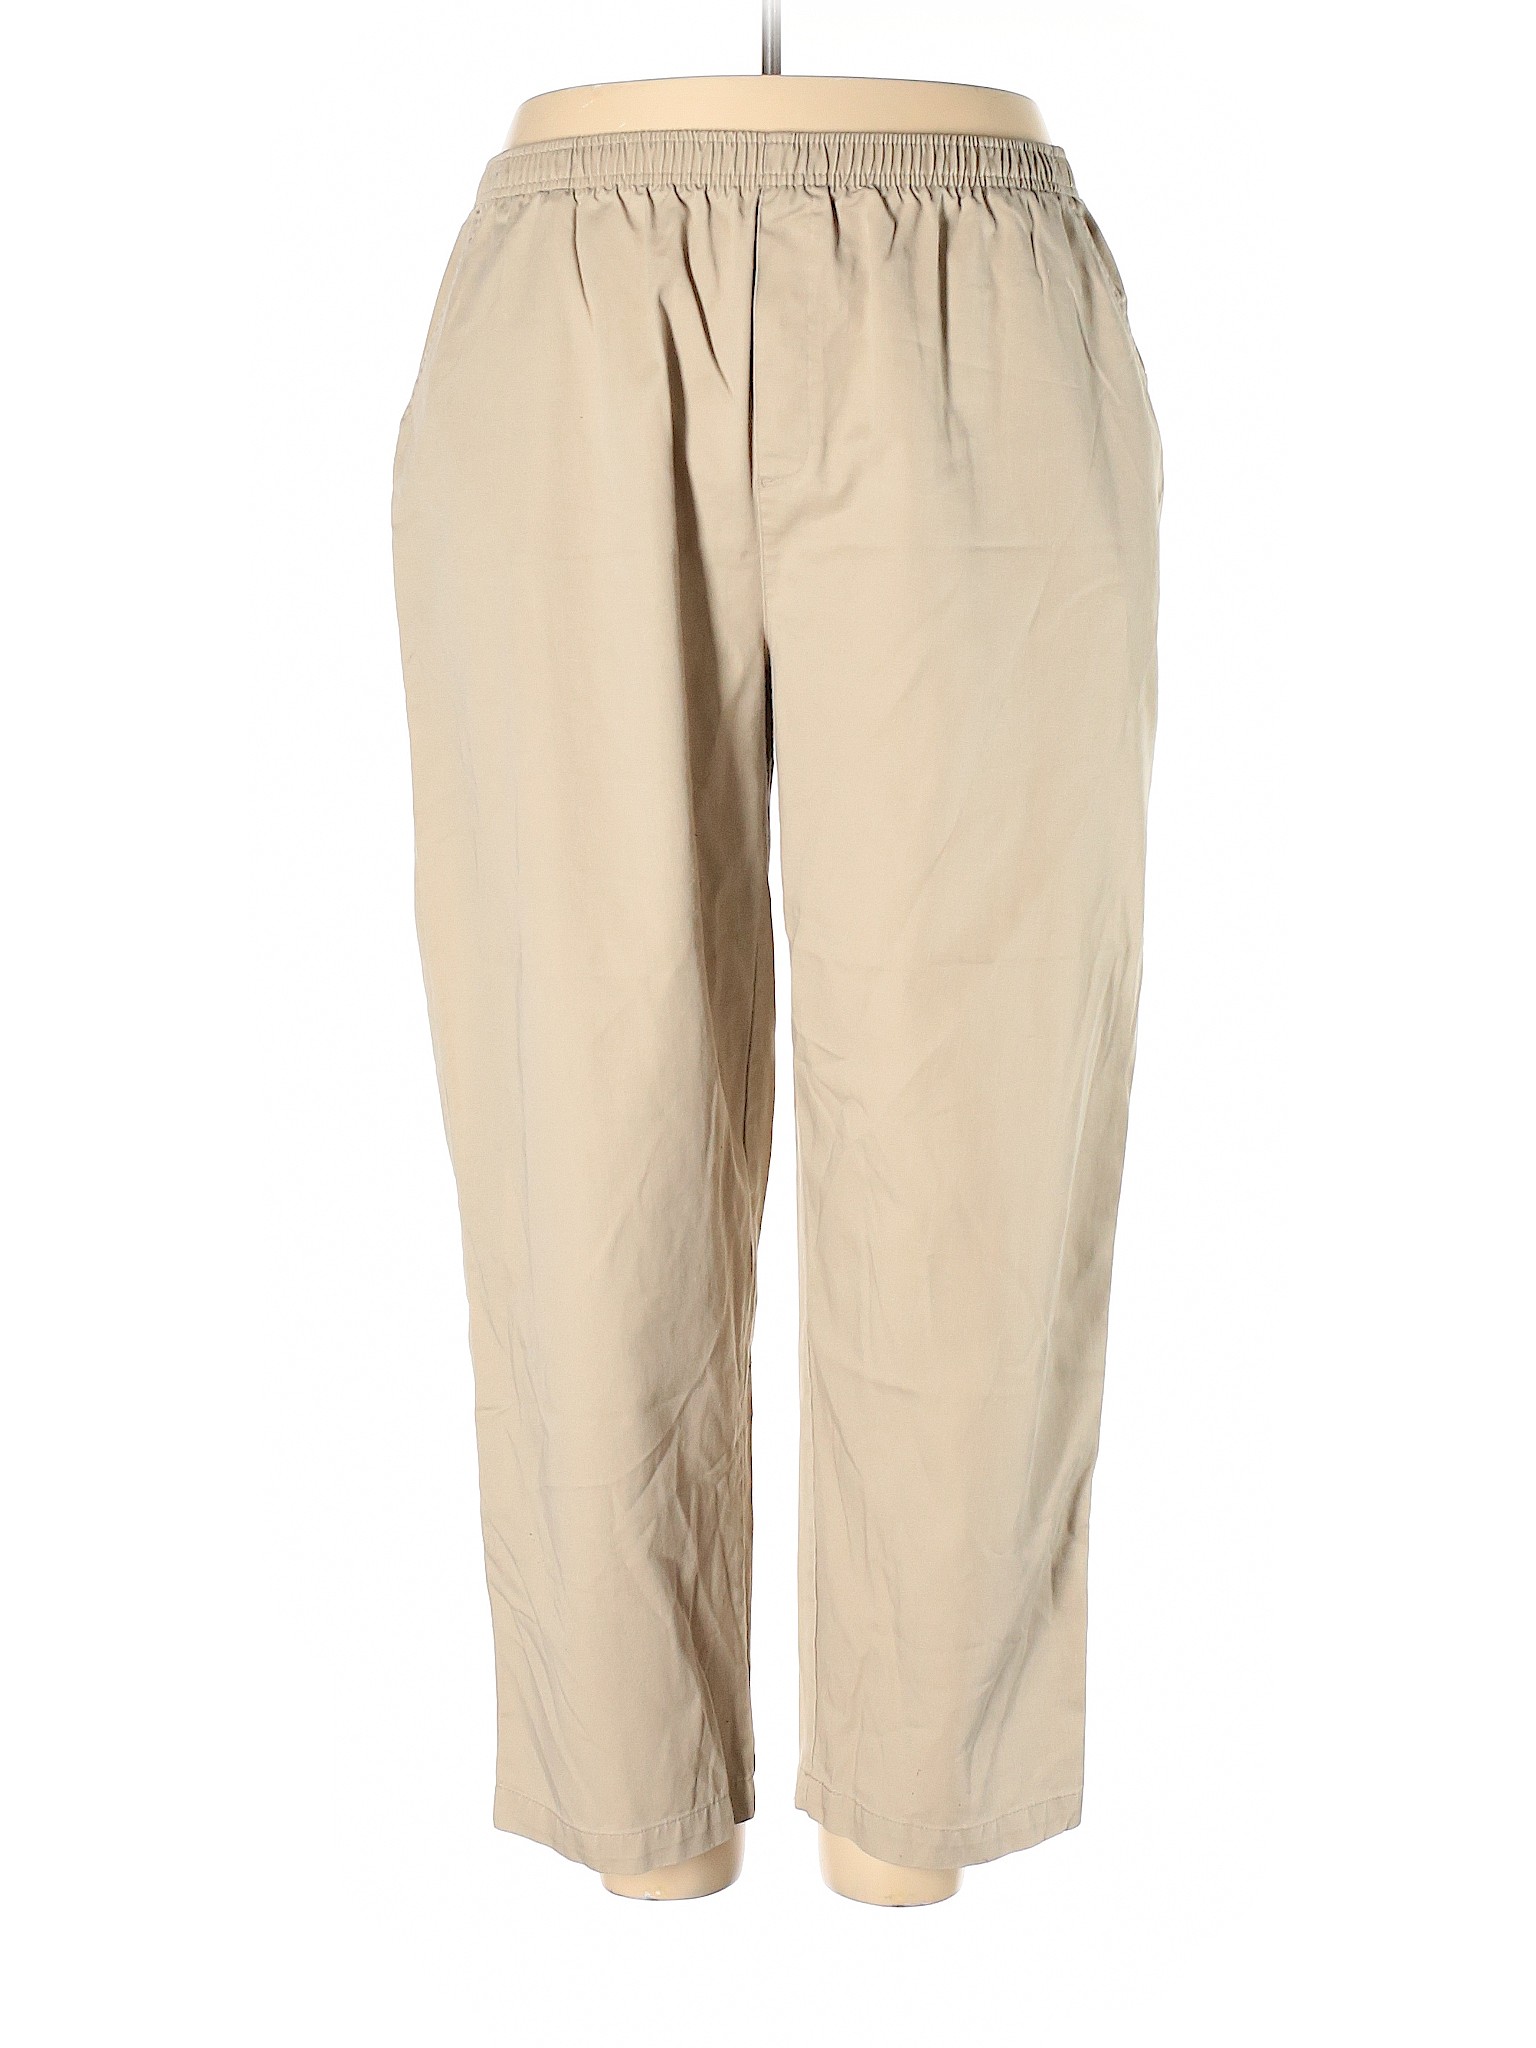 Cabin Creek Women Brown Casual Pants 24 Plus | eBay